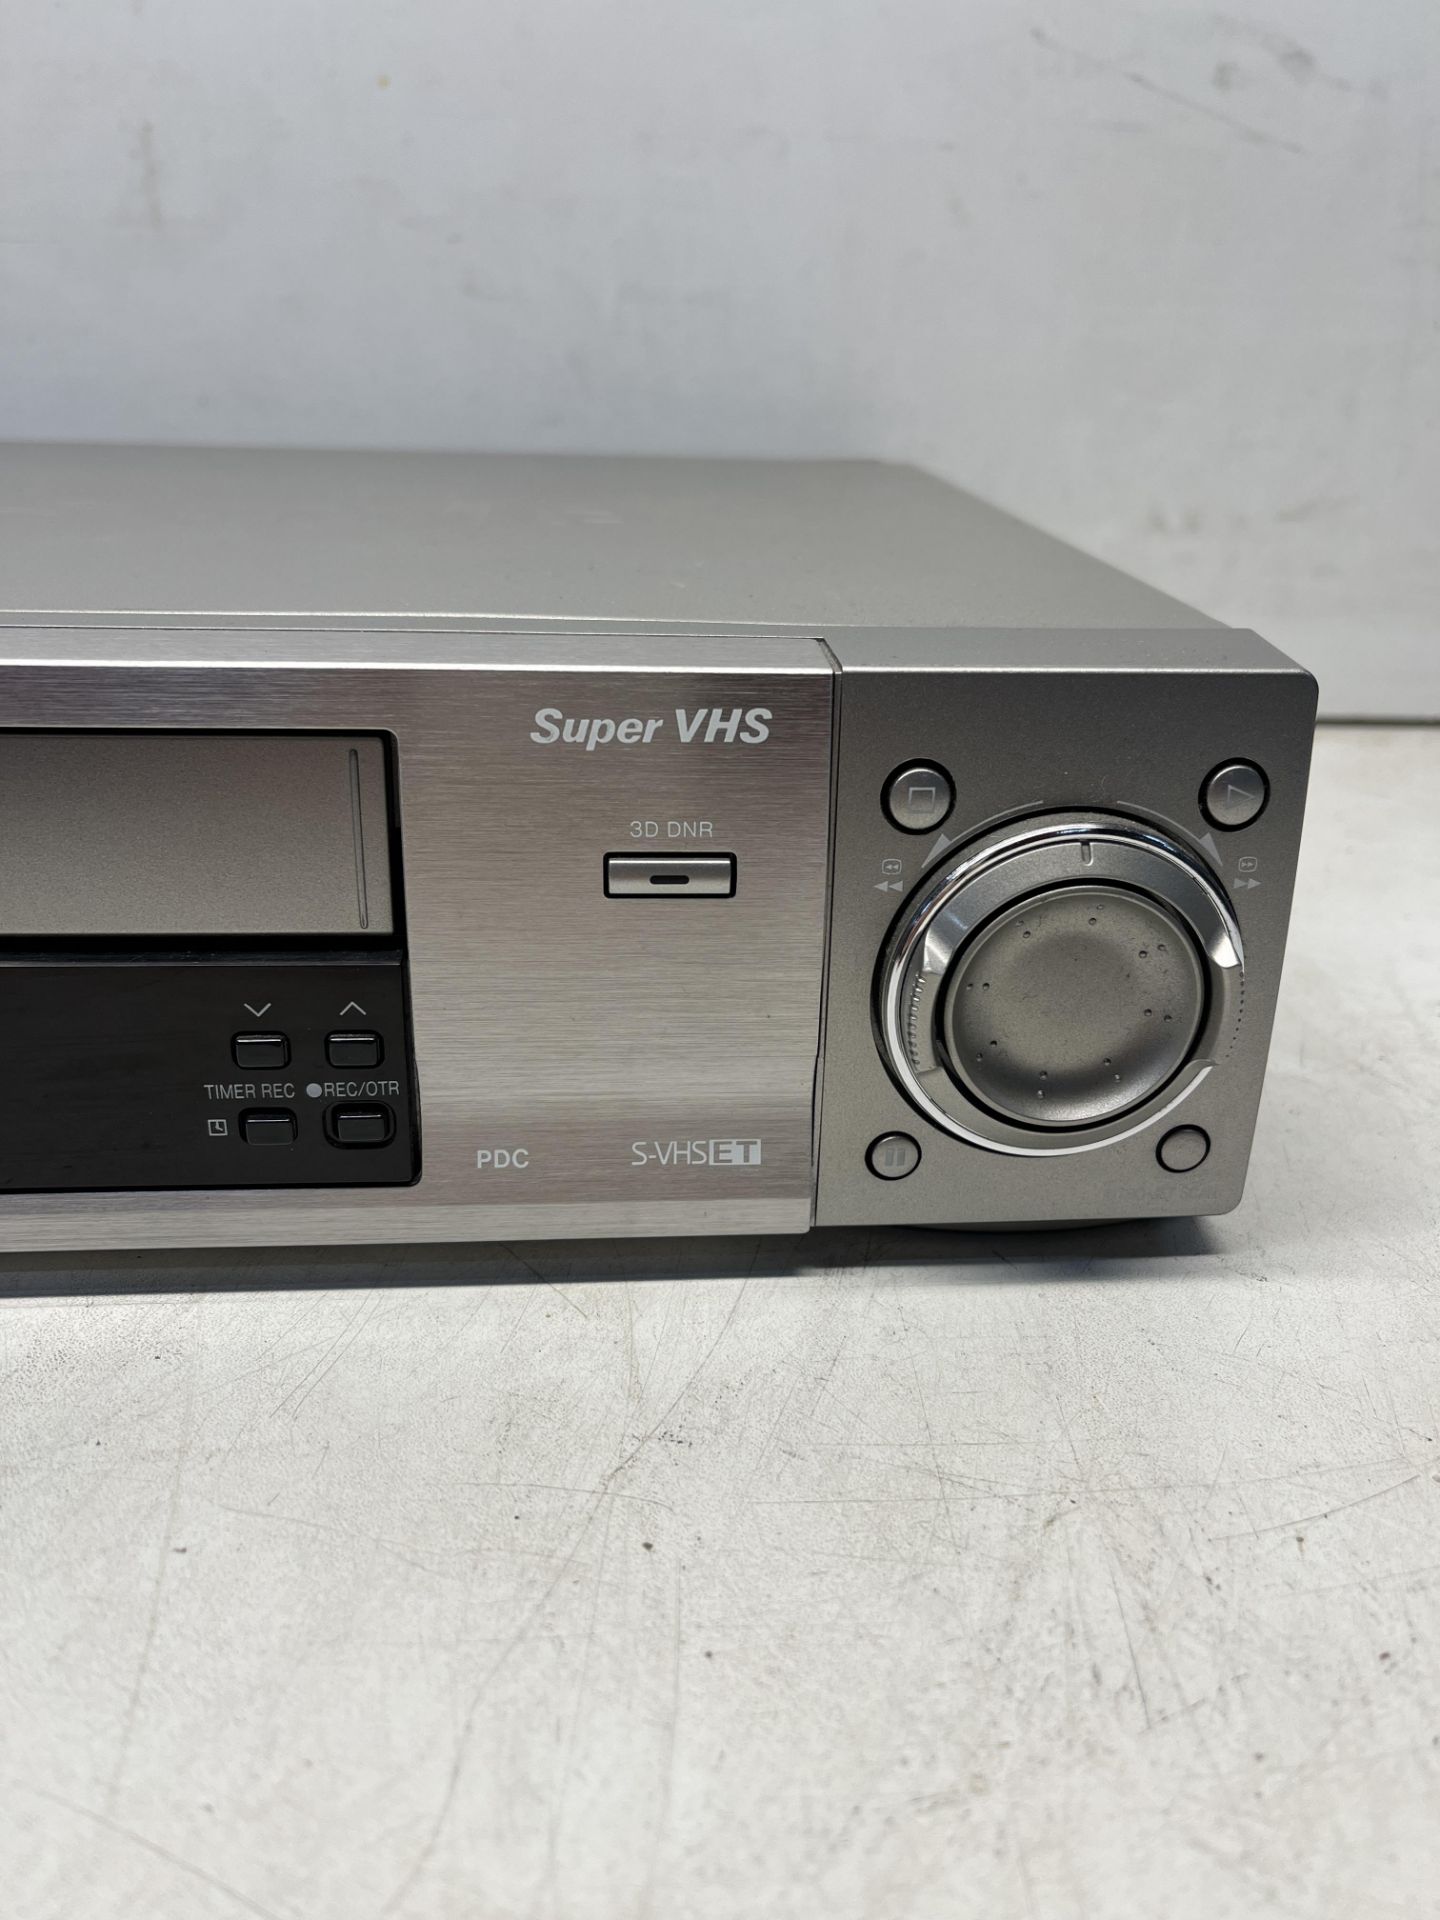 Panasonic NV-HS960 High-End Super VHS Video Player Super Drive - Image 3 of 5